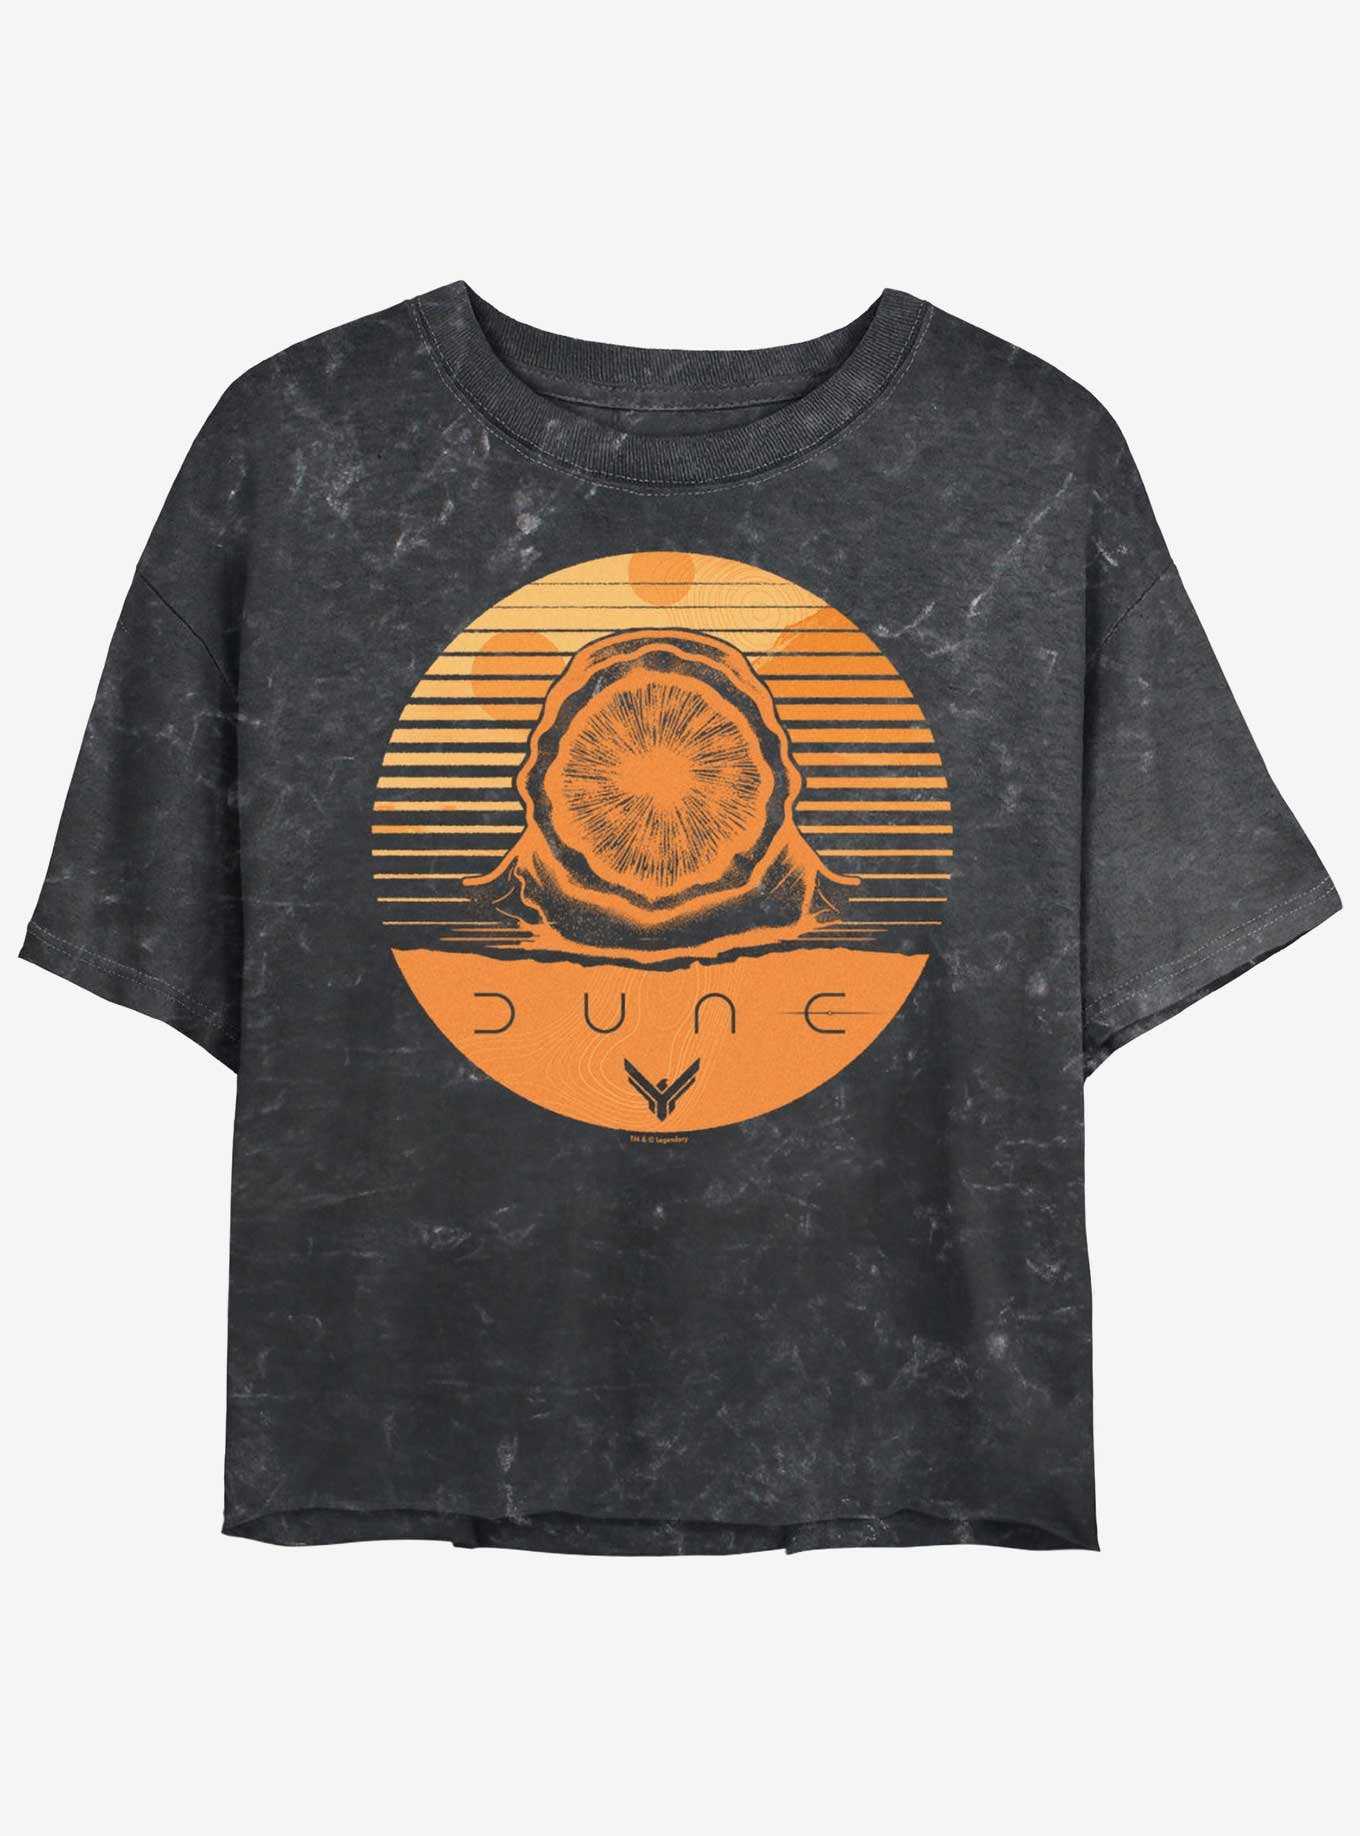 Dune: Part Two Arrakis Sandworm Stamp Mineral Wash Girls Crop T-Shirt, , hi-res